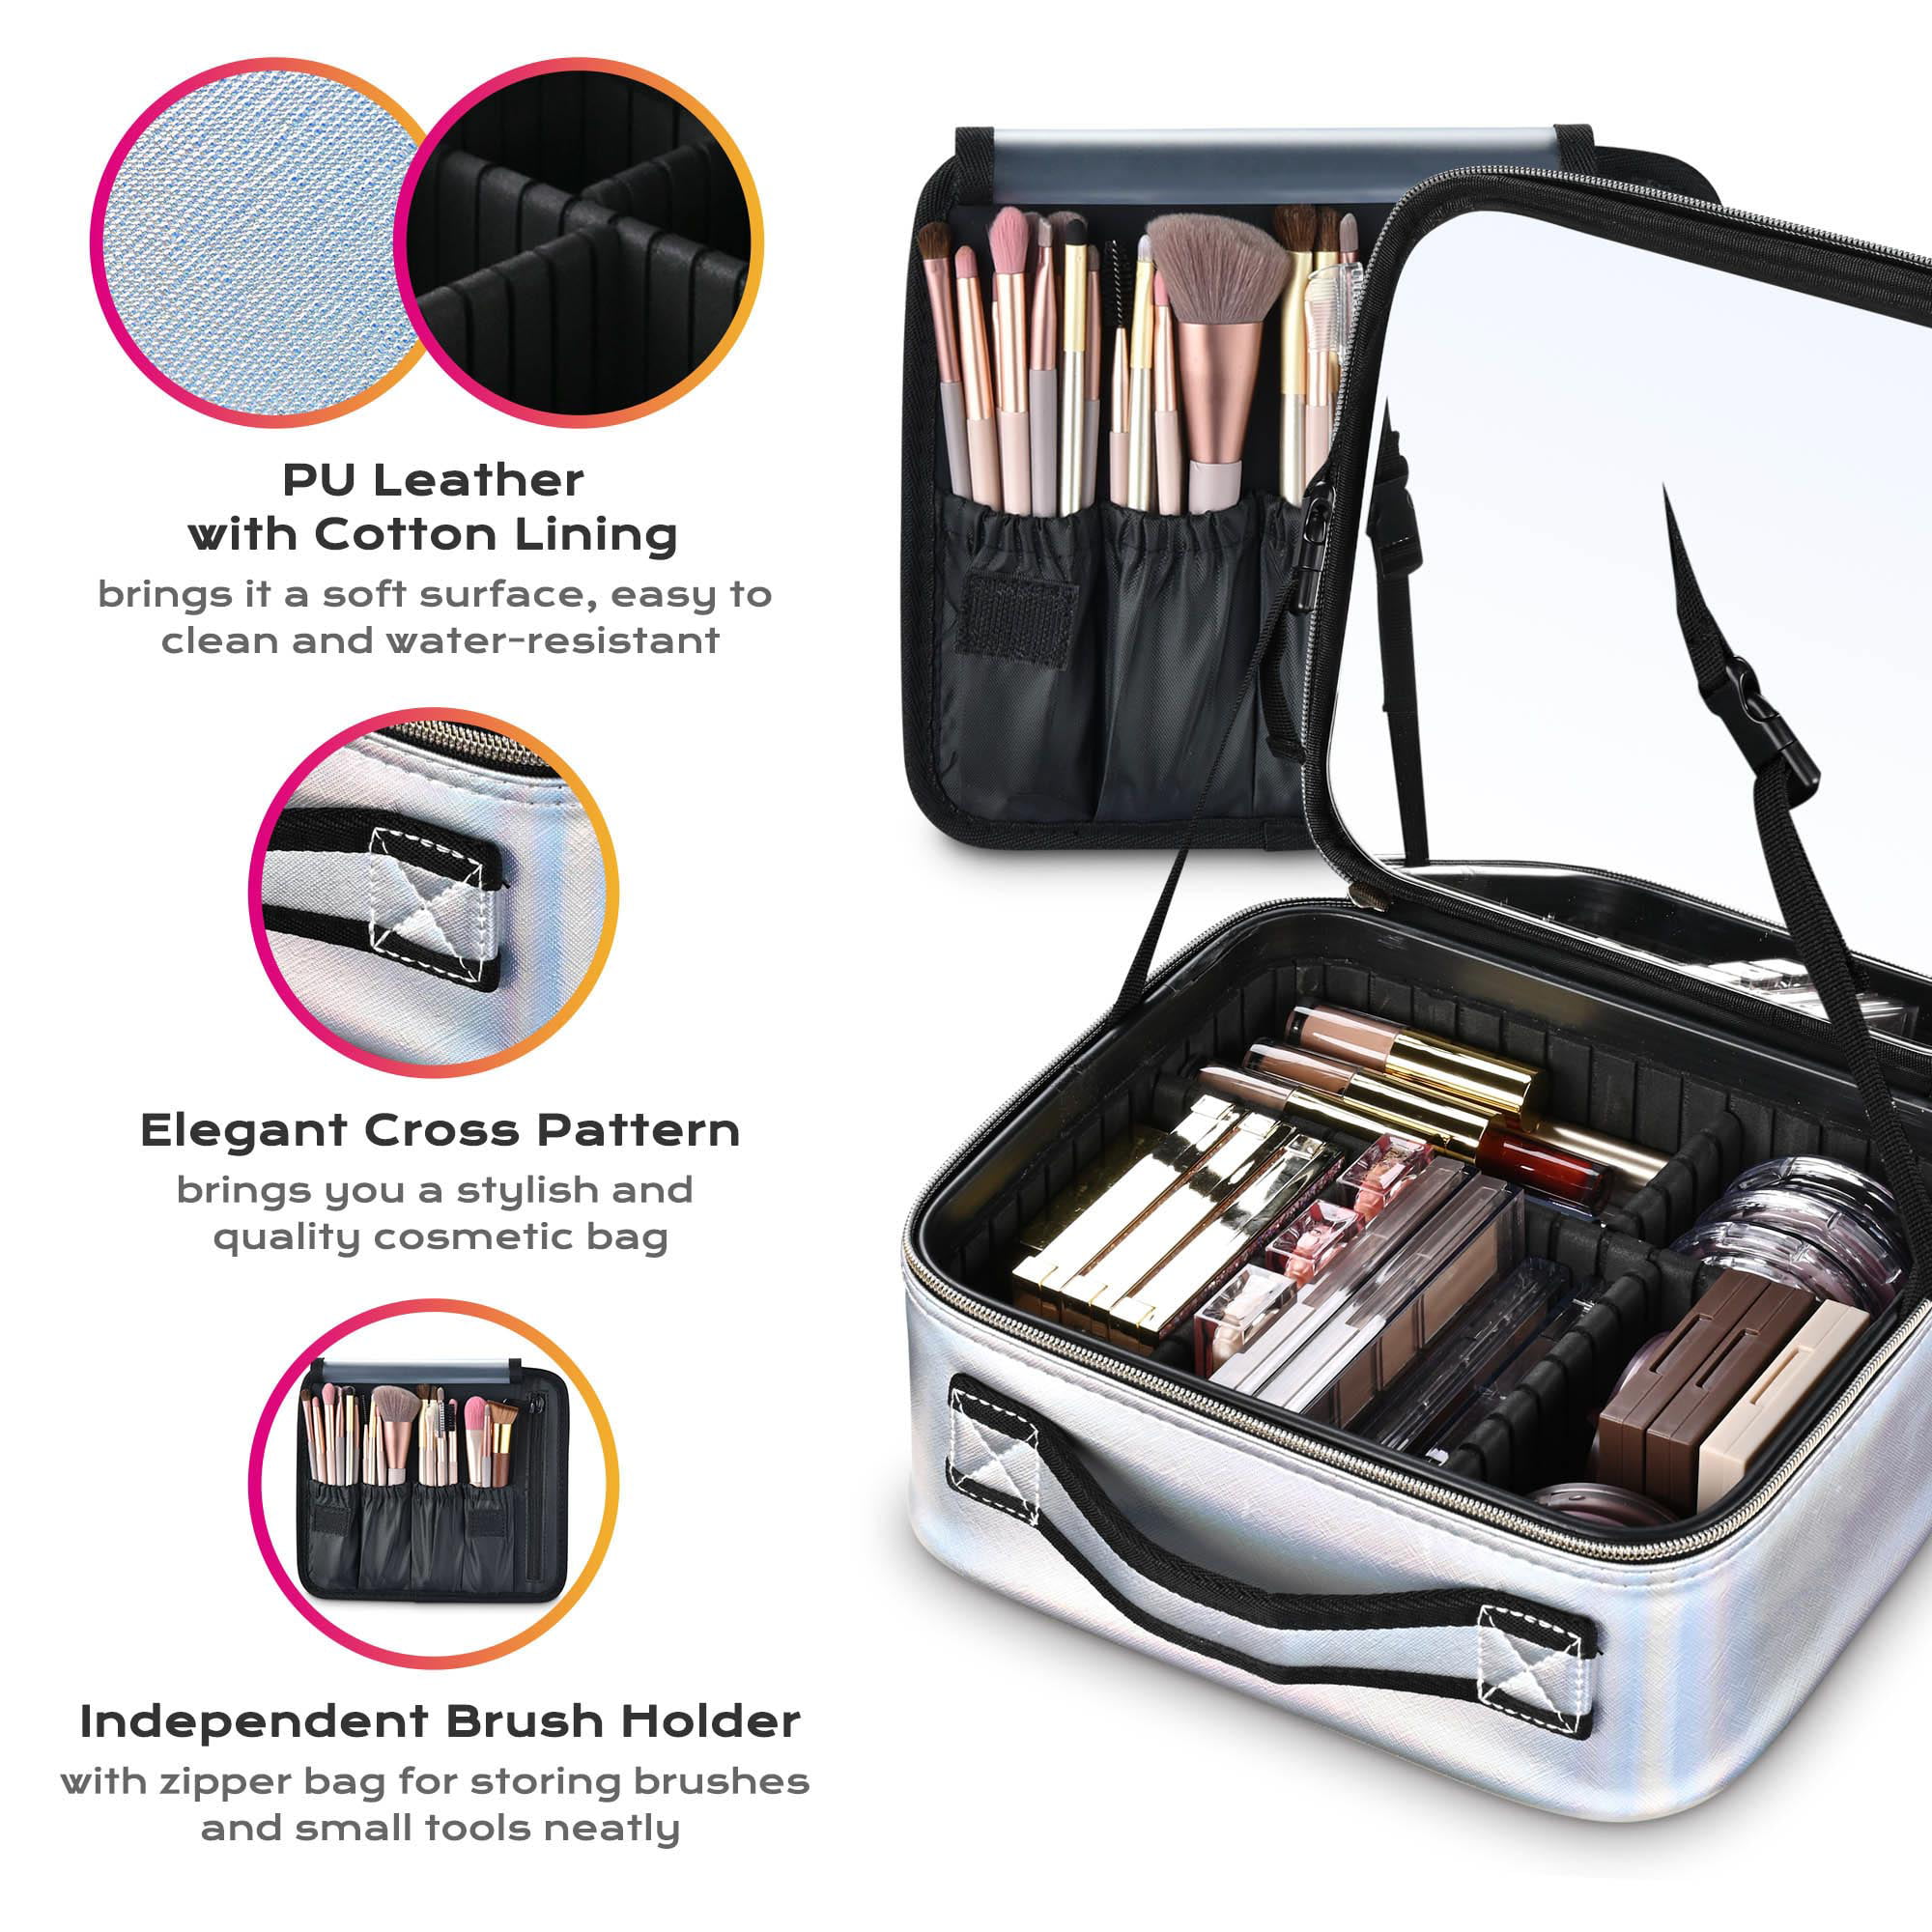 Byootique Essential Loose-Leaf Binder Makeup Bag Cosmetic Organizer